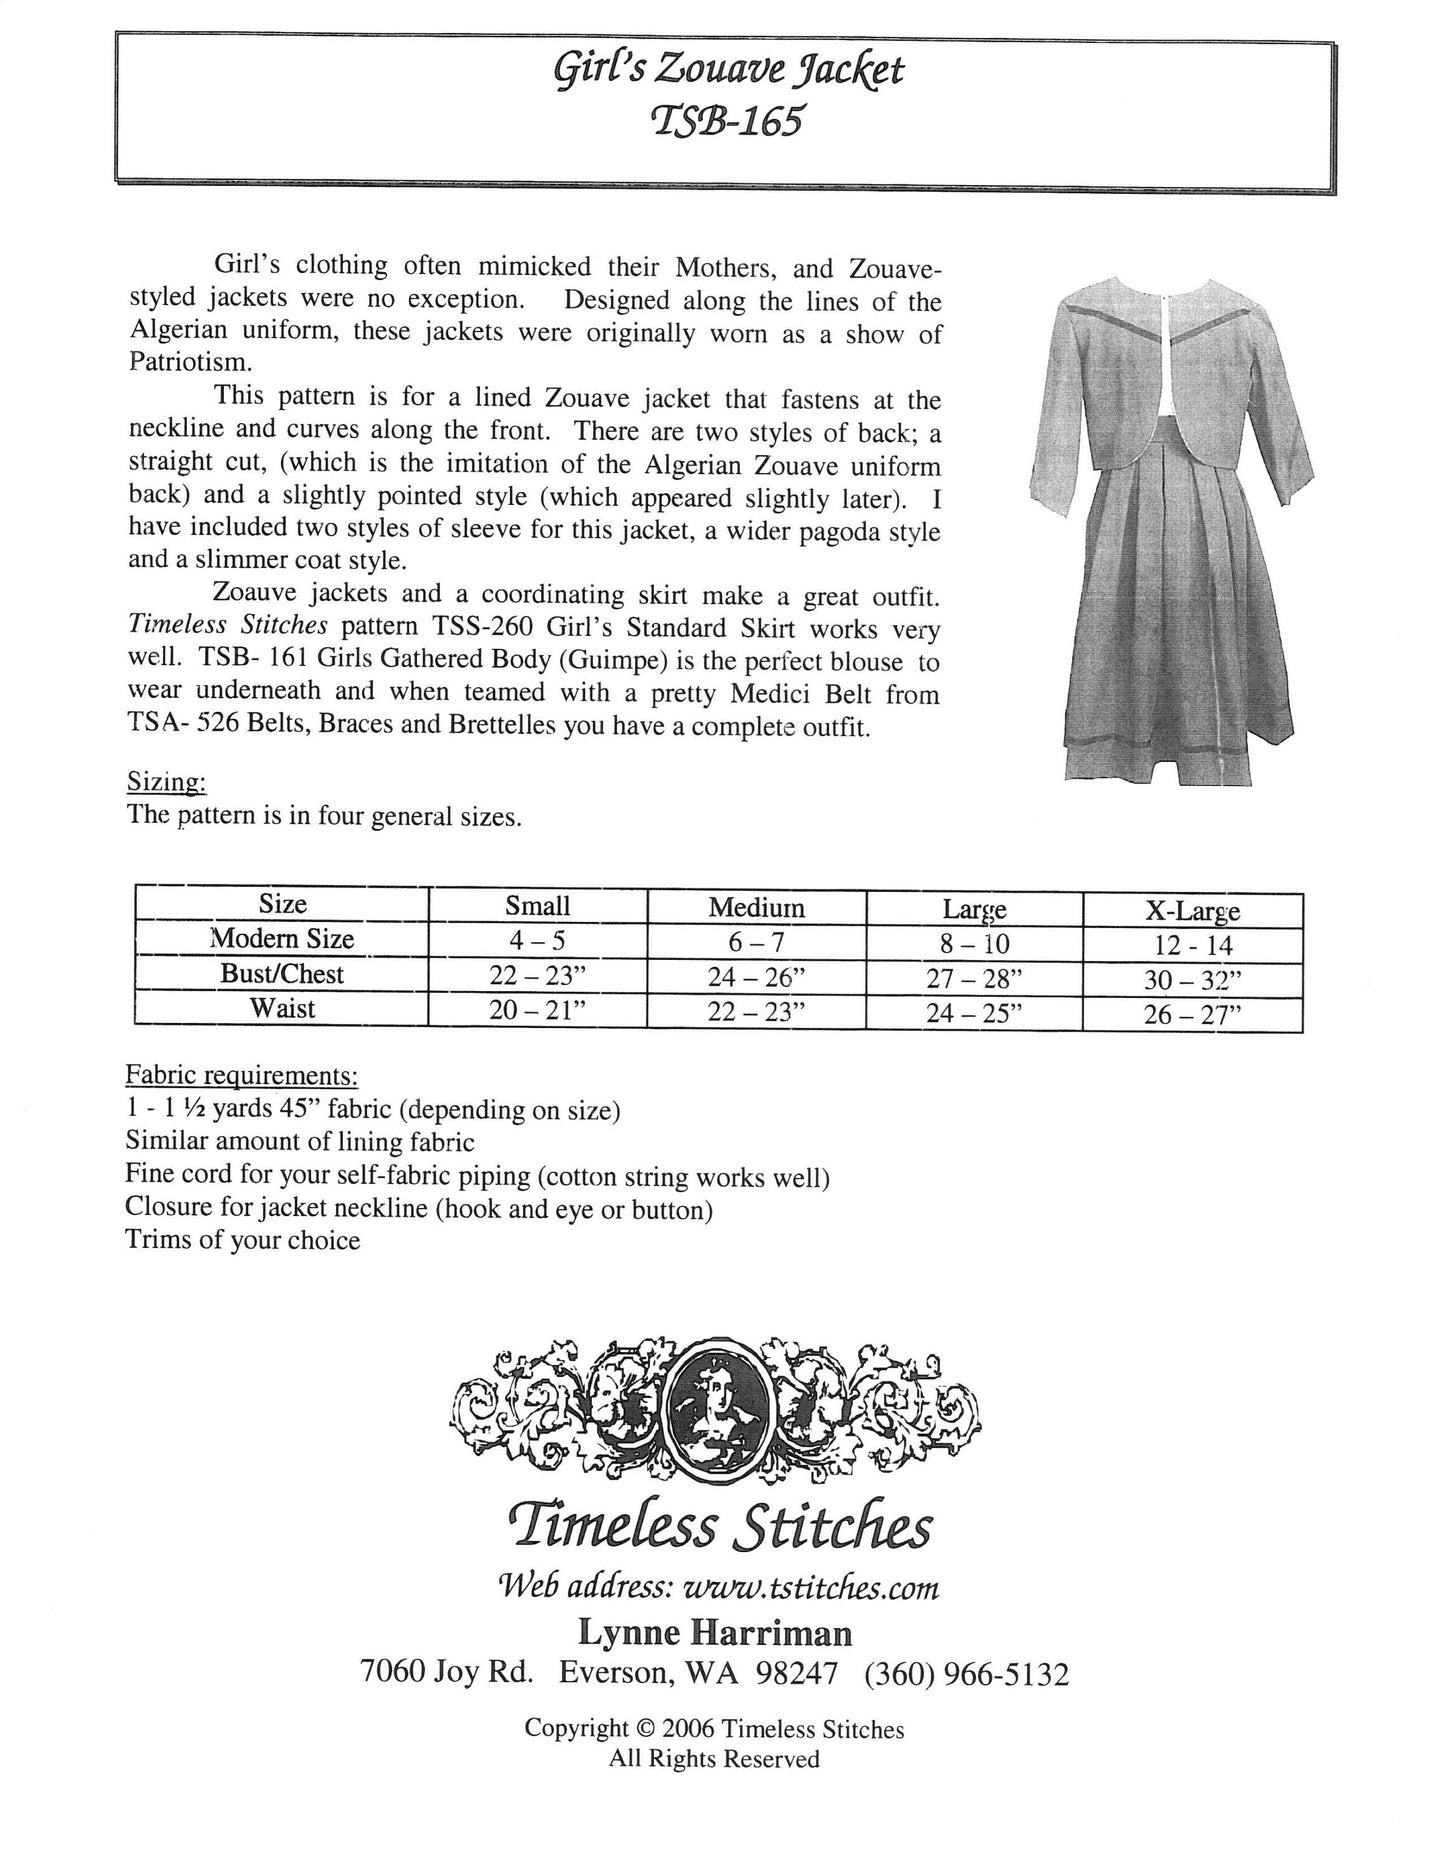 Girl's Zouave Jacket /19 th Century Girls jacket/ Timeless Stitches Sewing Pattern TSB-165 Girl's Zouave Jacket